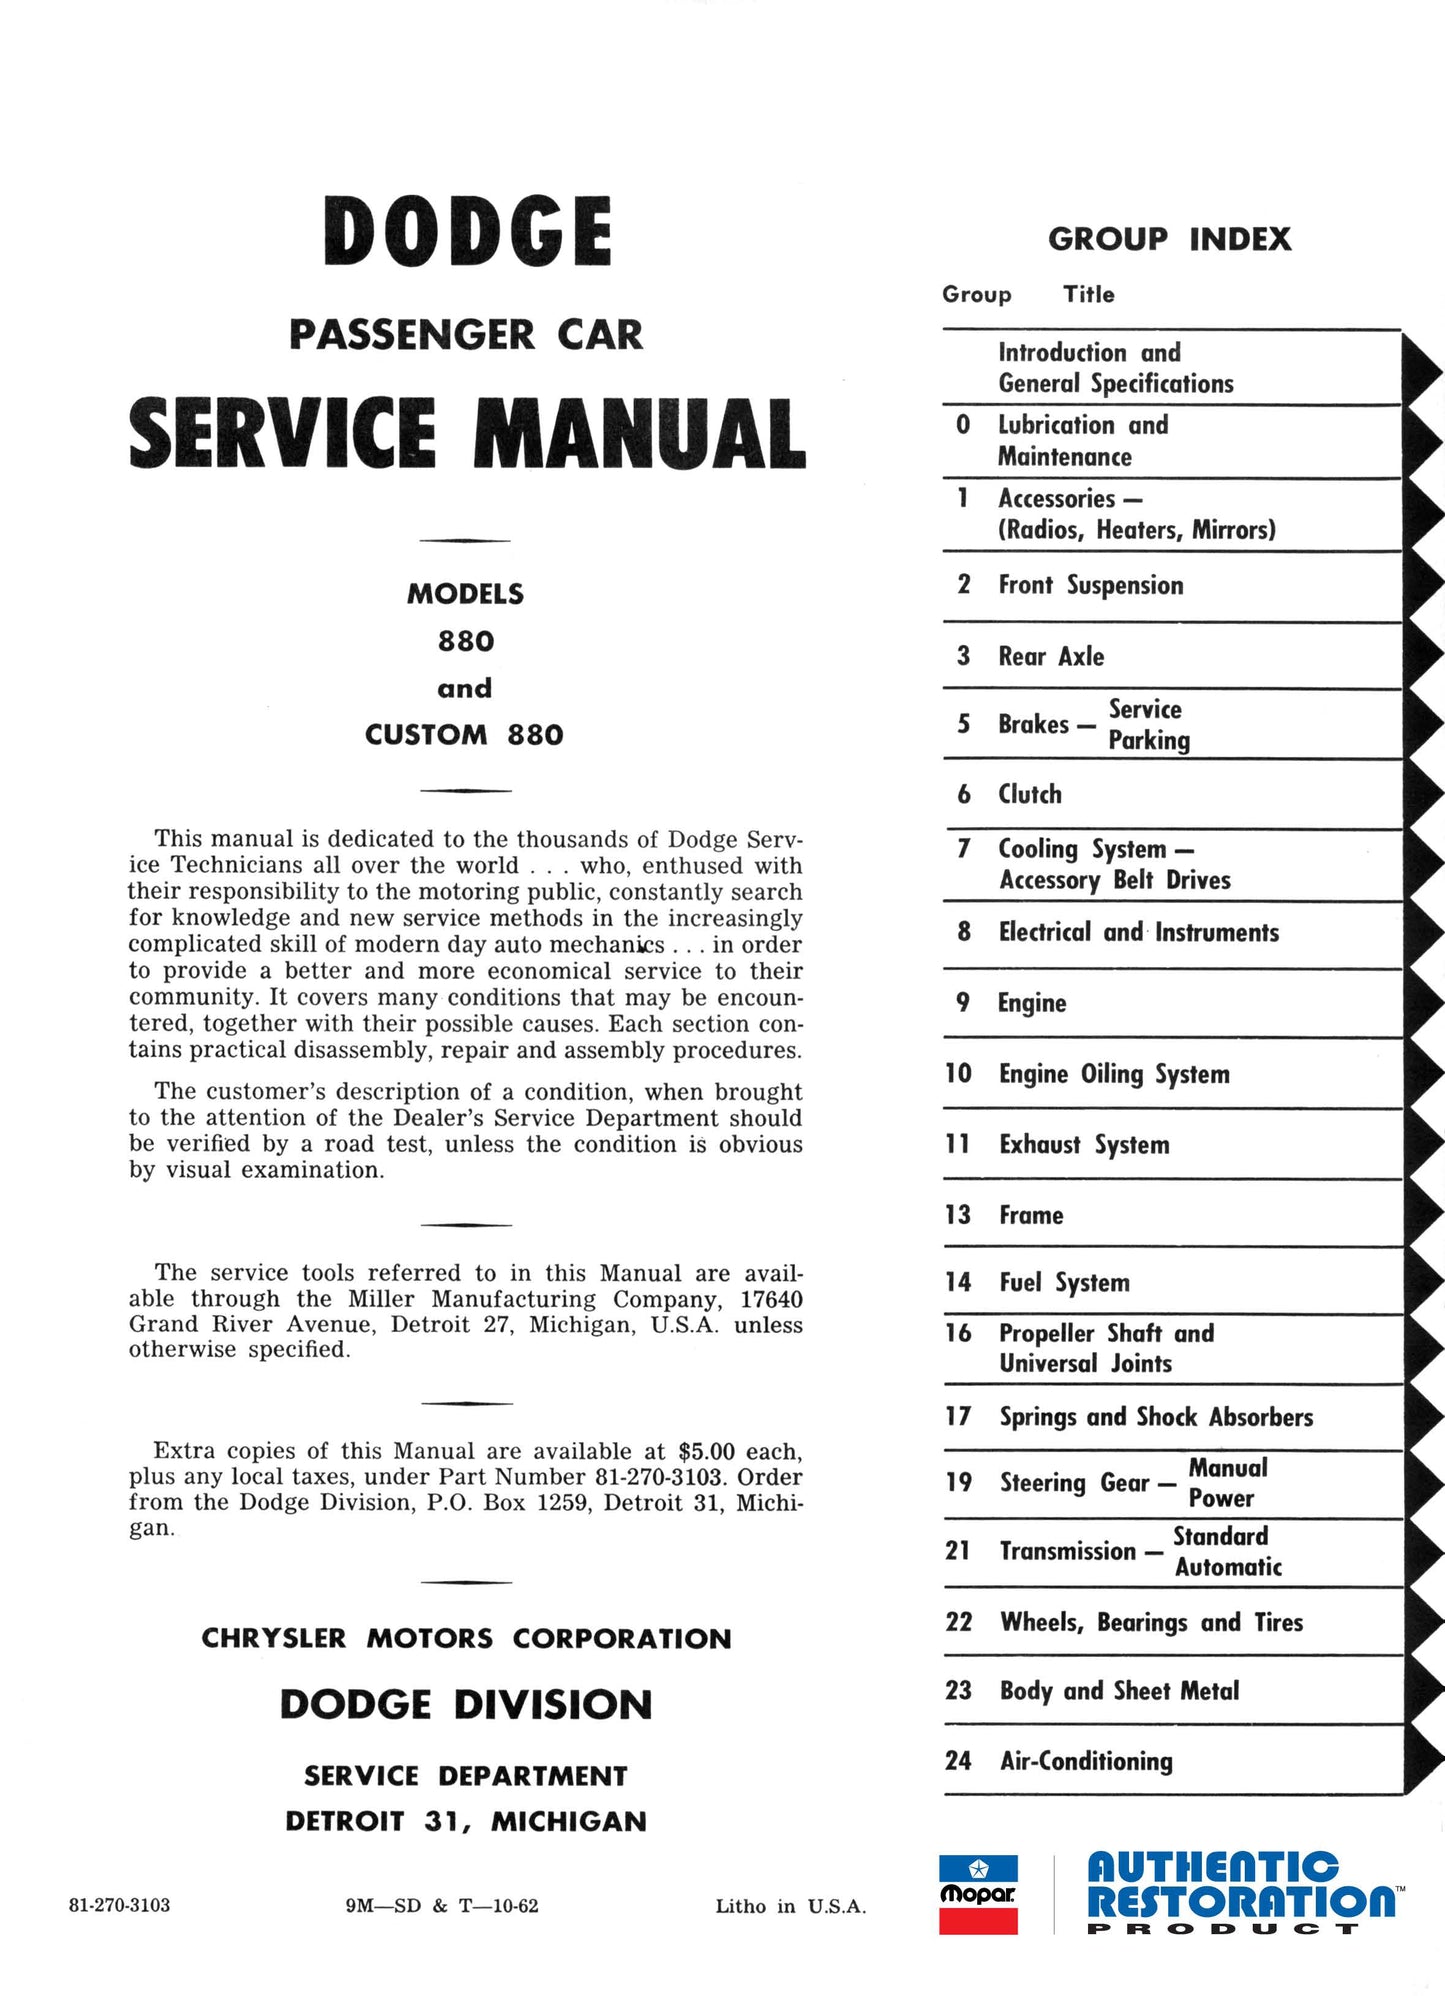 1963 Dodge Service Manual - All Models